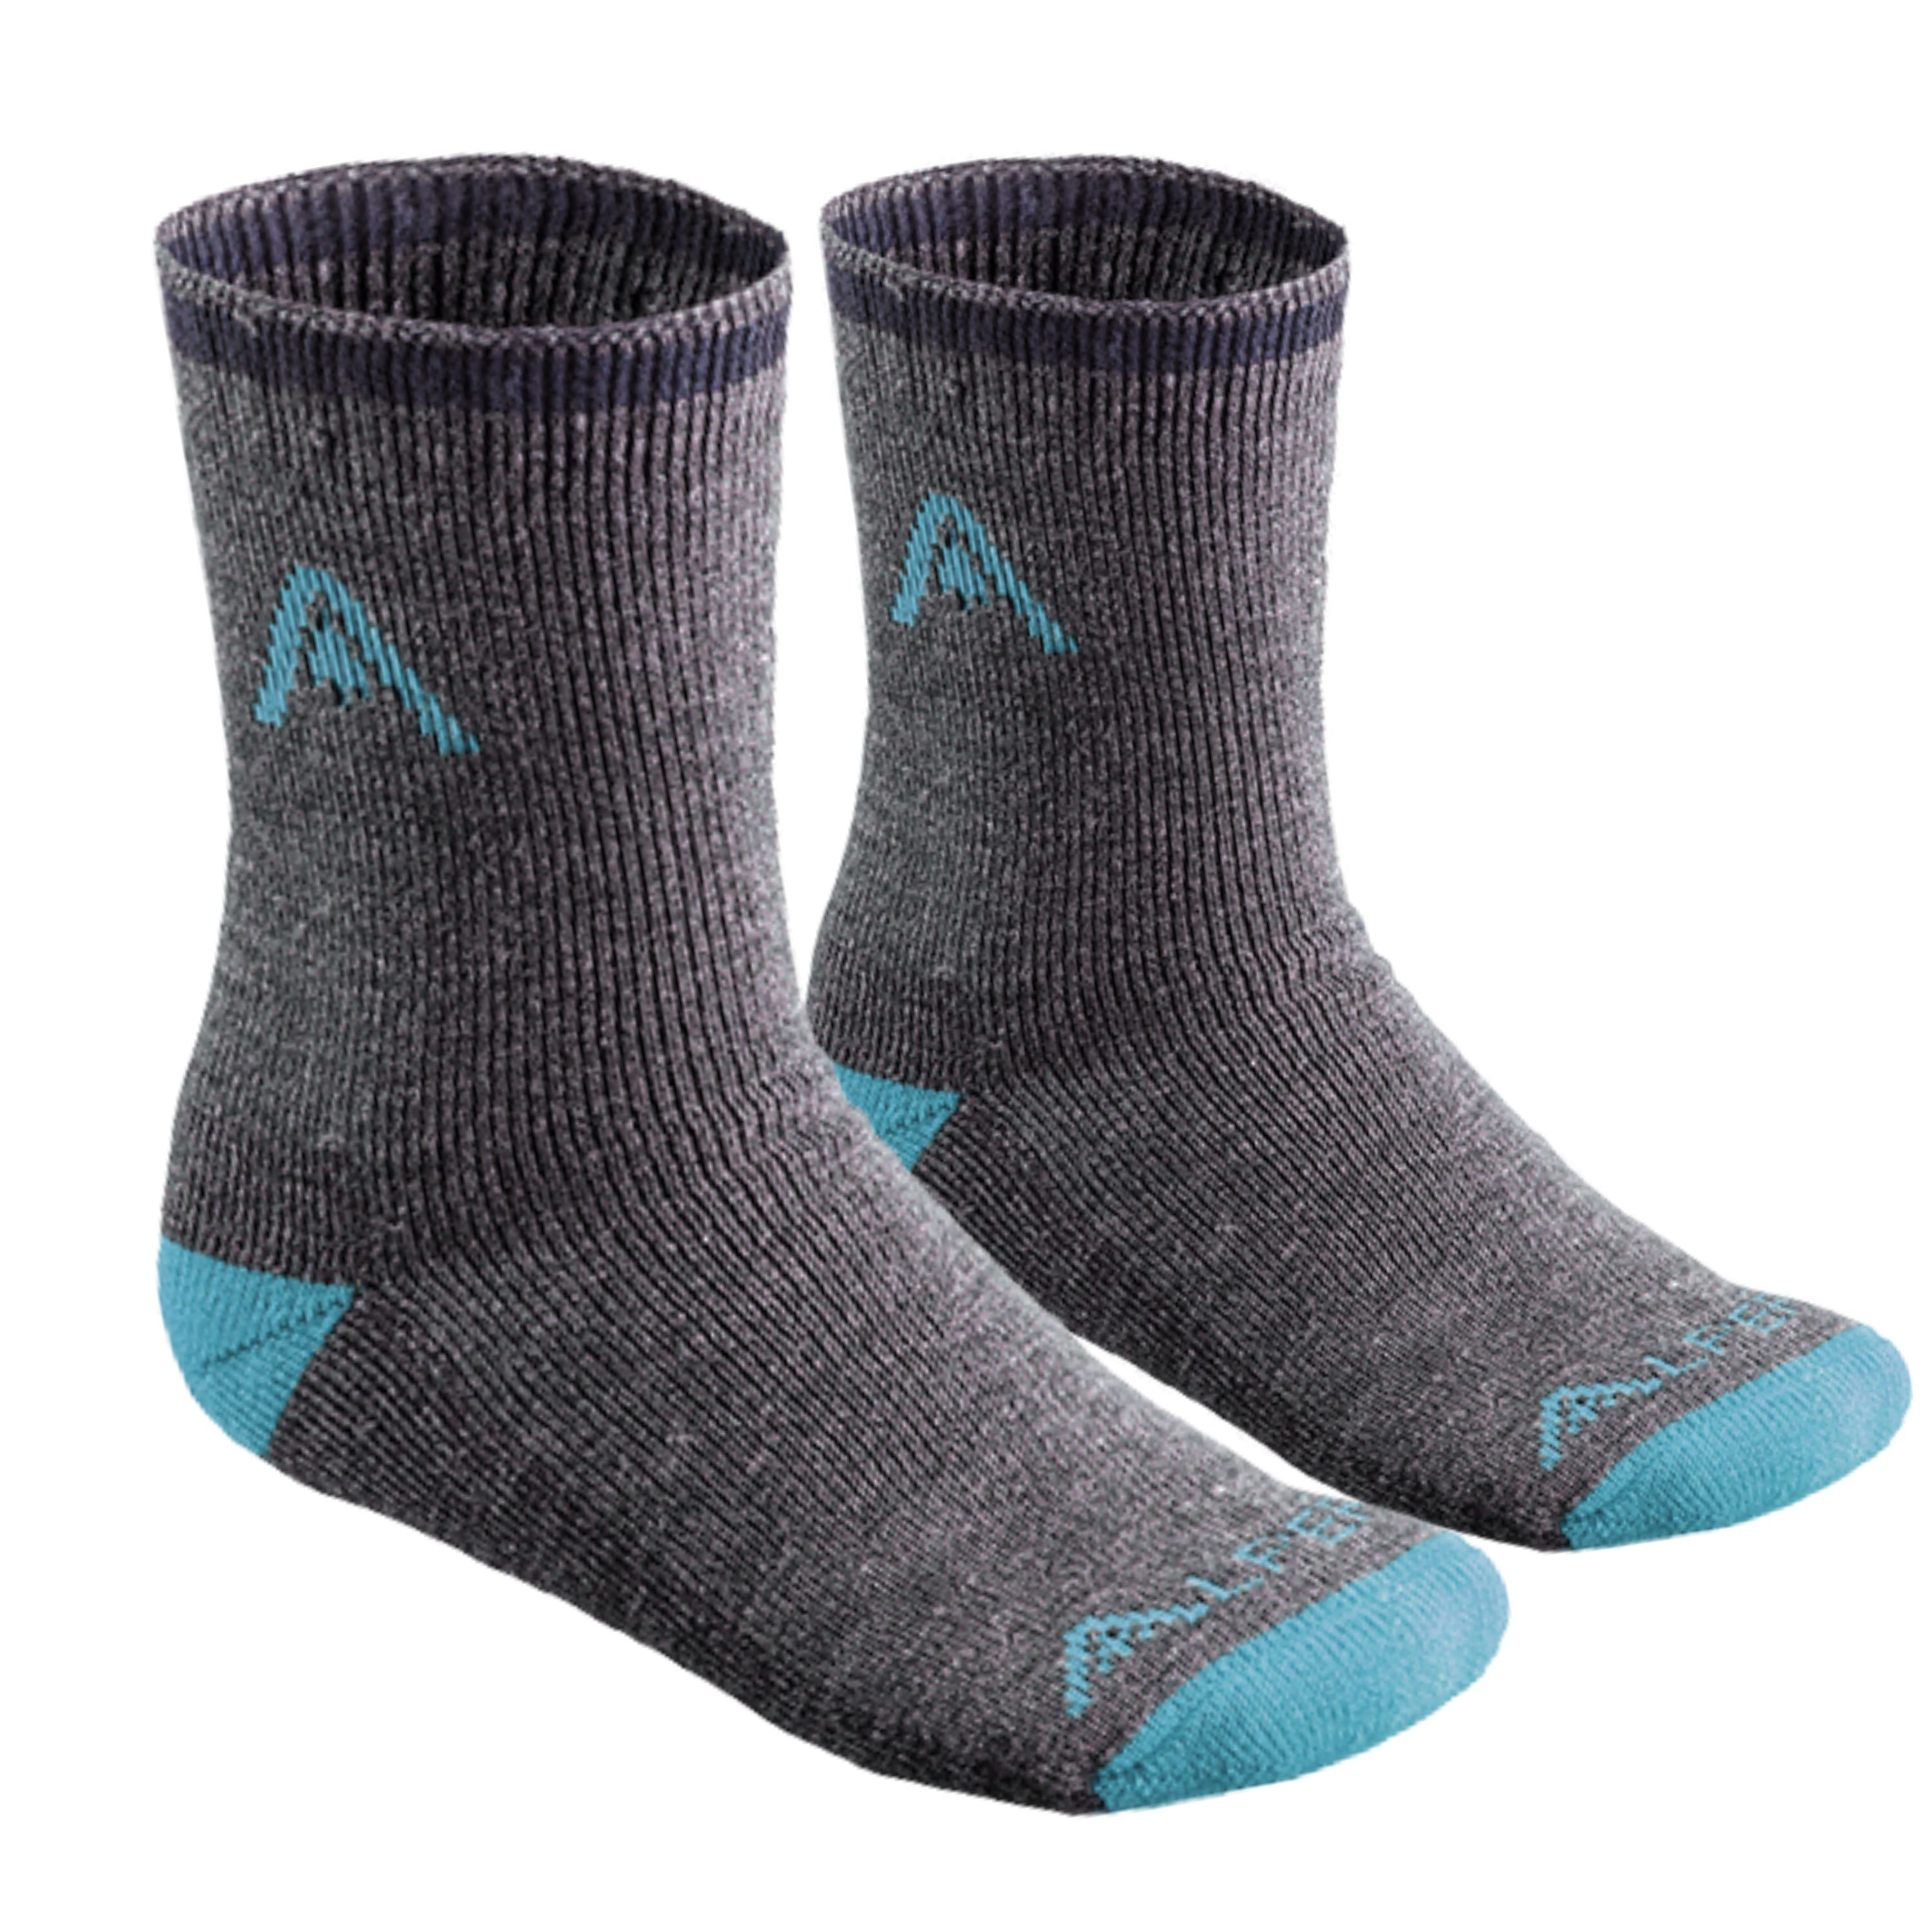 "Zermatt" socks - Men's